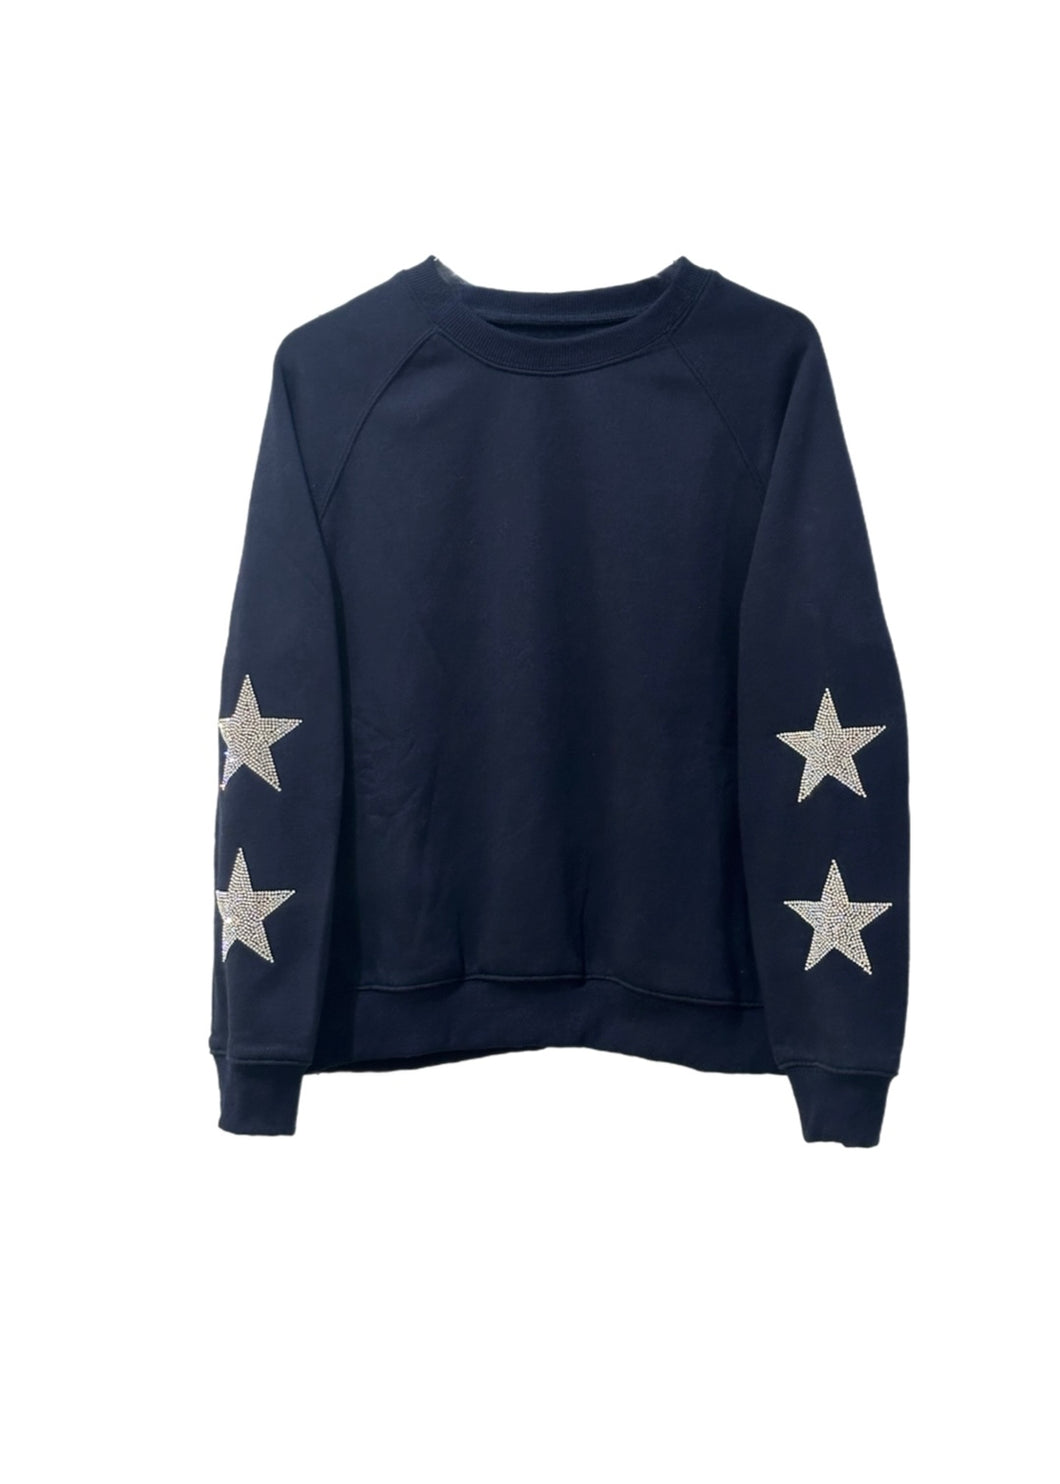 CrystalRags Navy Oversized Sweatshirt with Crystal Star Design